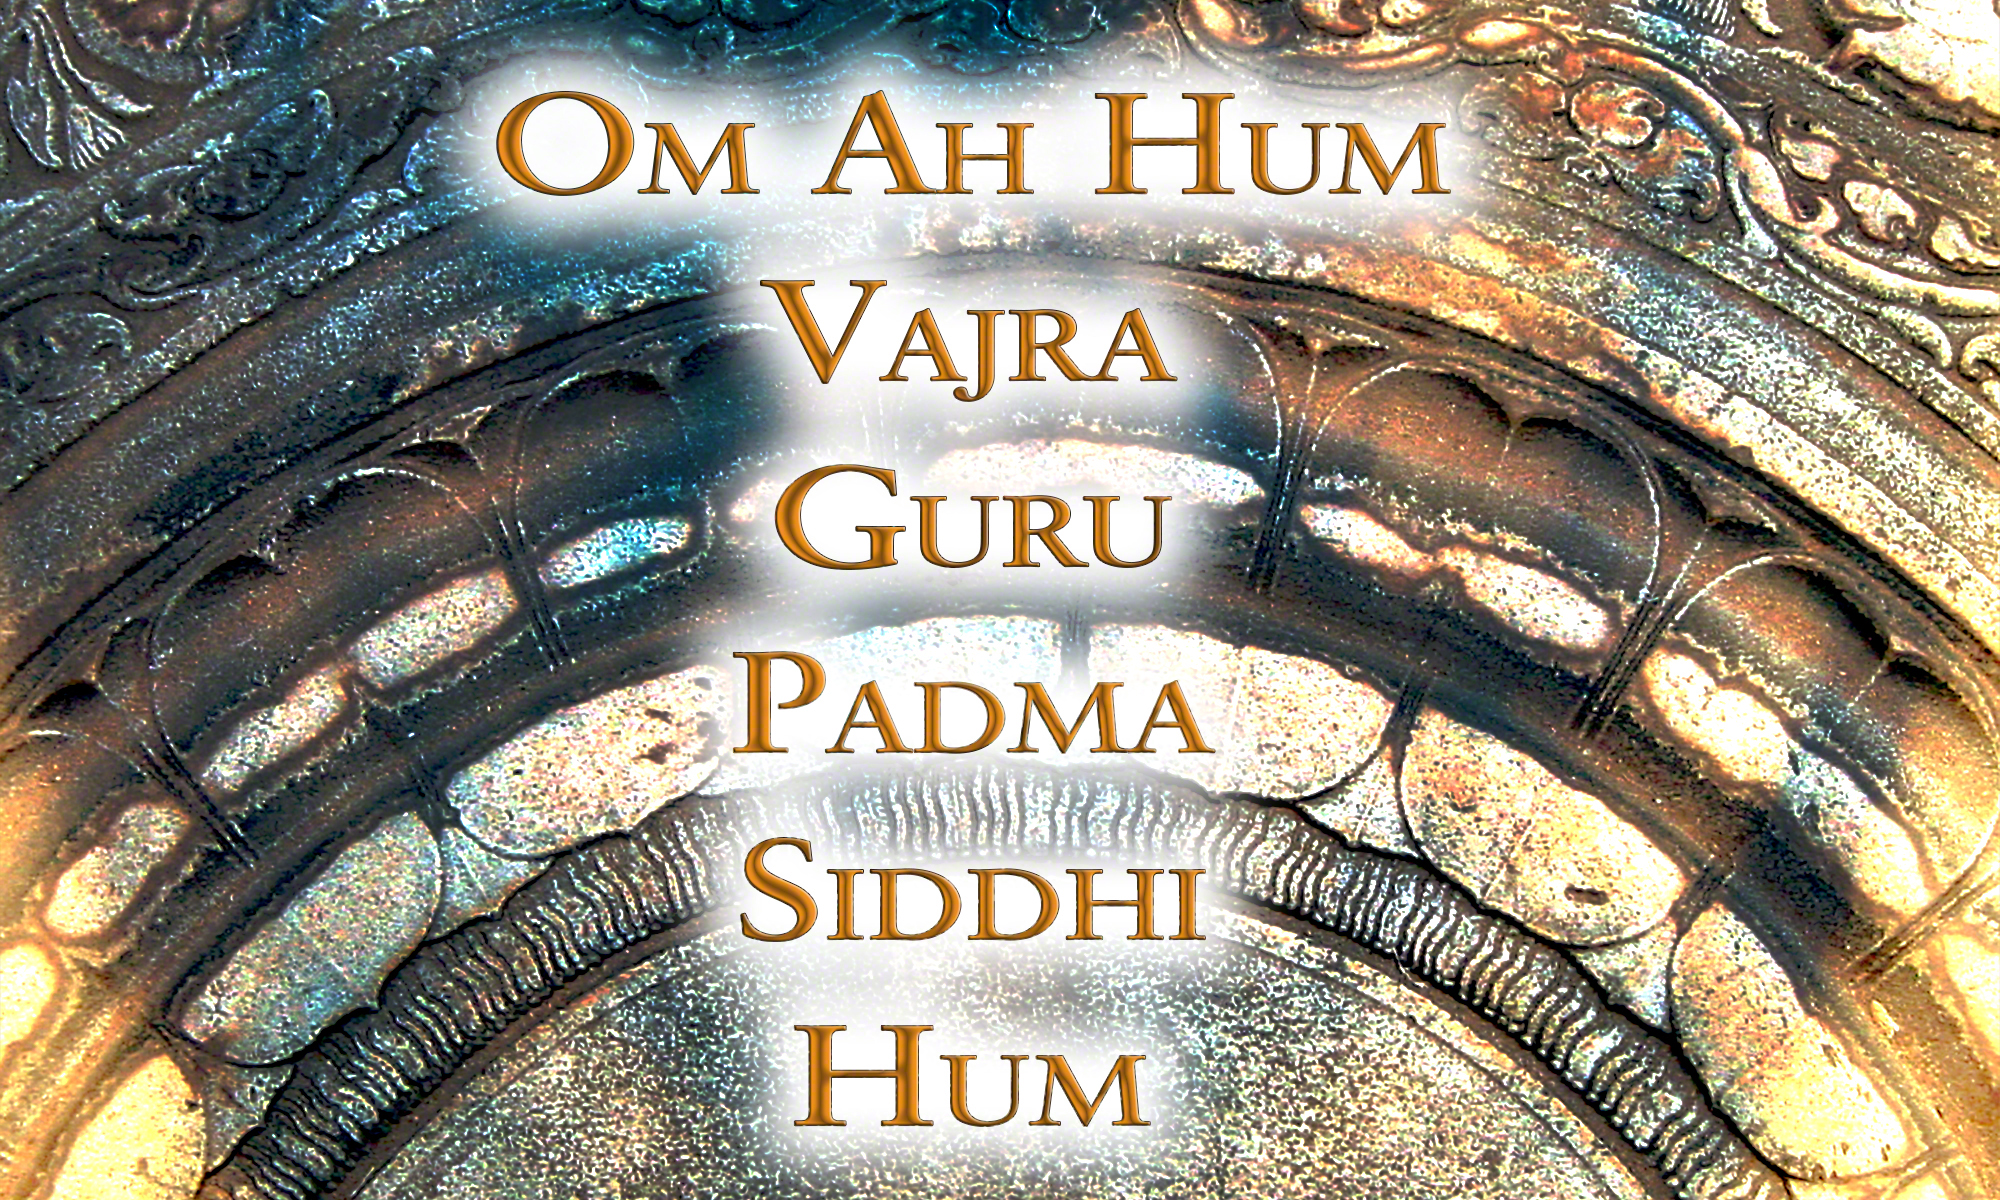 Om ah hum benza guru padma siddhi hum meaning